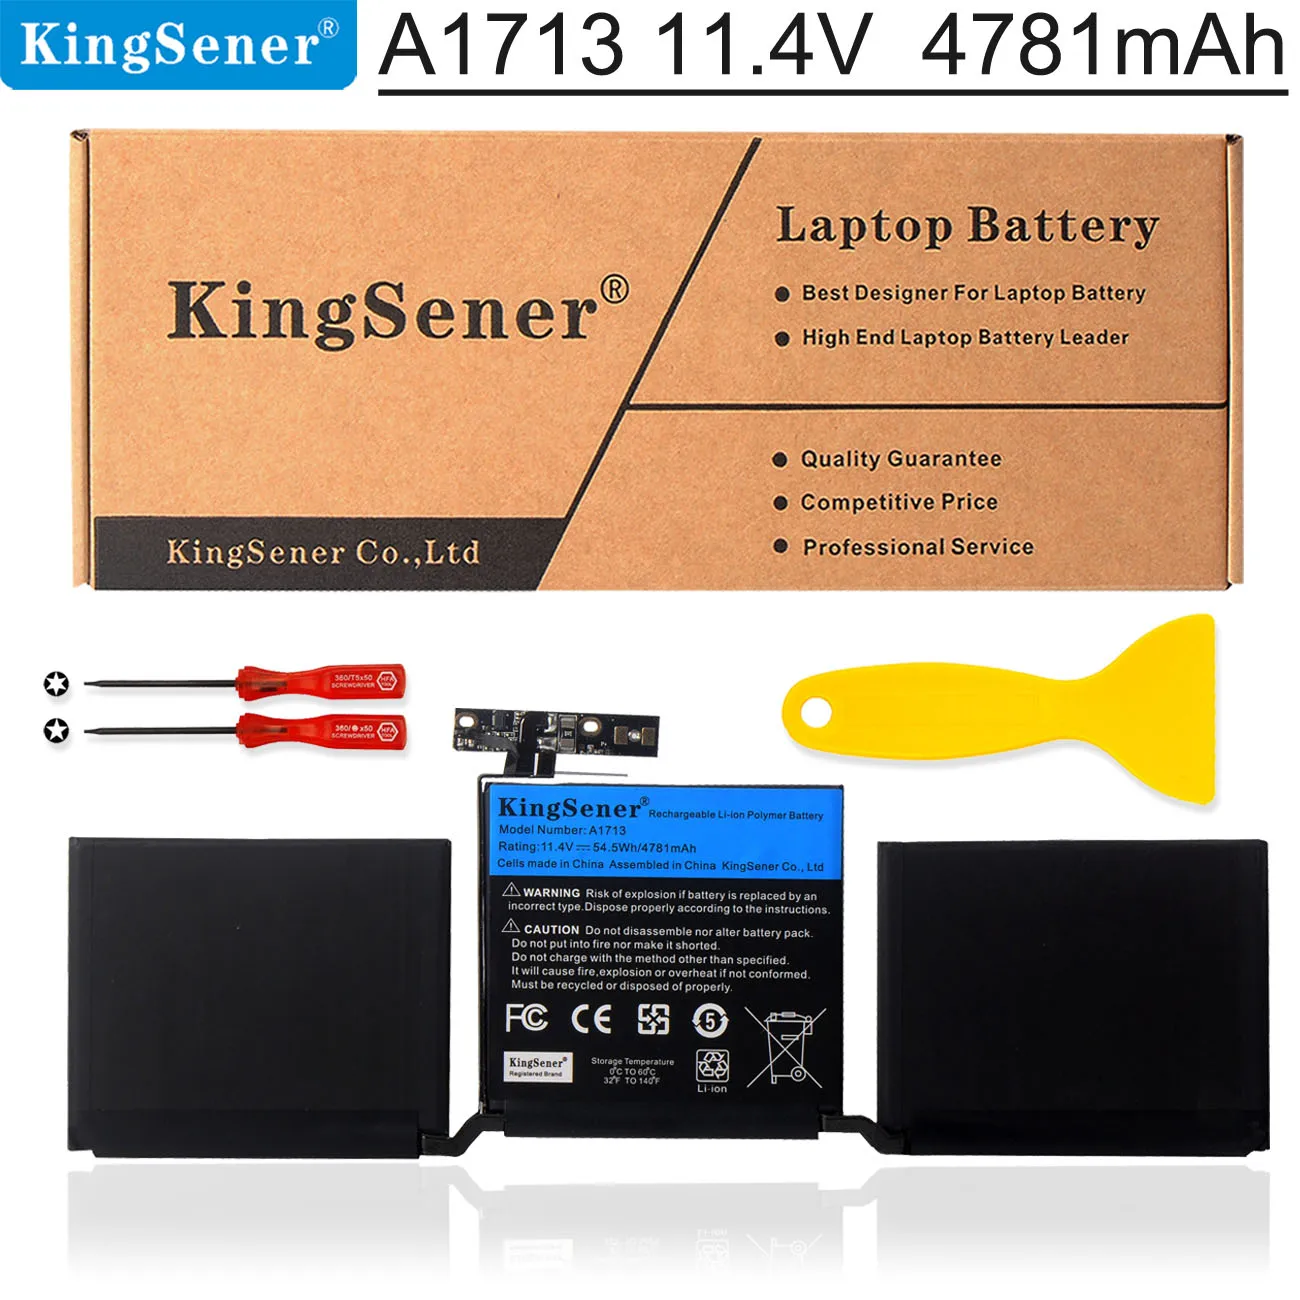 KingSener A1713 Laptop Battery for Apple MacBook Pro 13